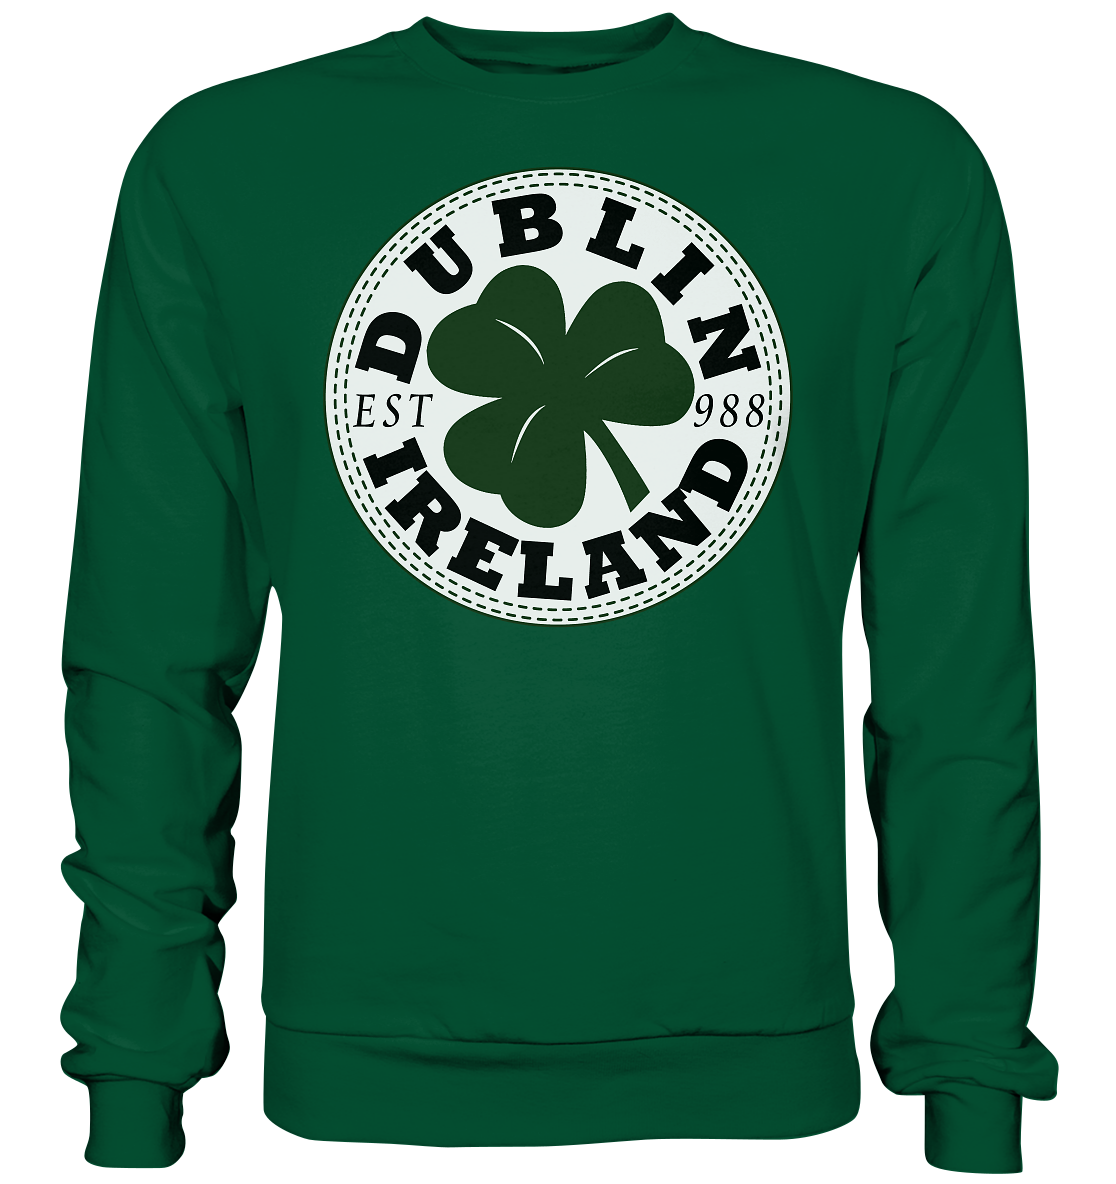 Dublin "Ireland / Est 988" - Basic Sweatshirt